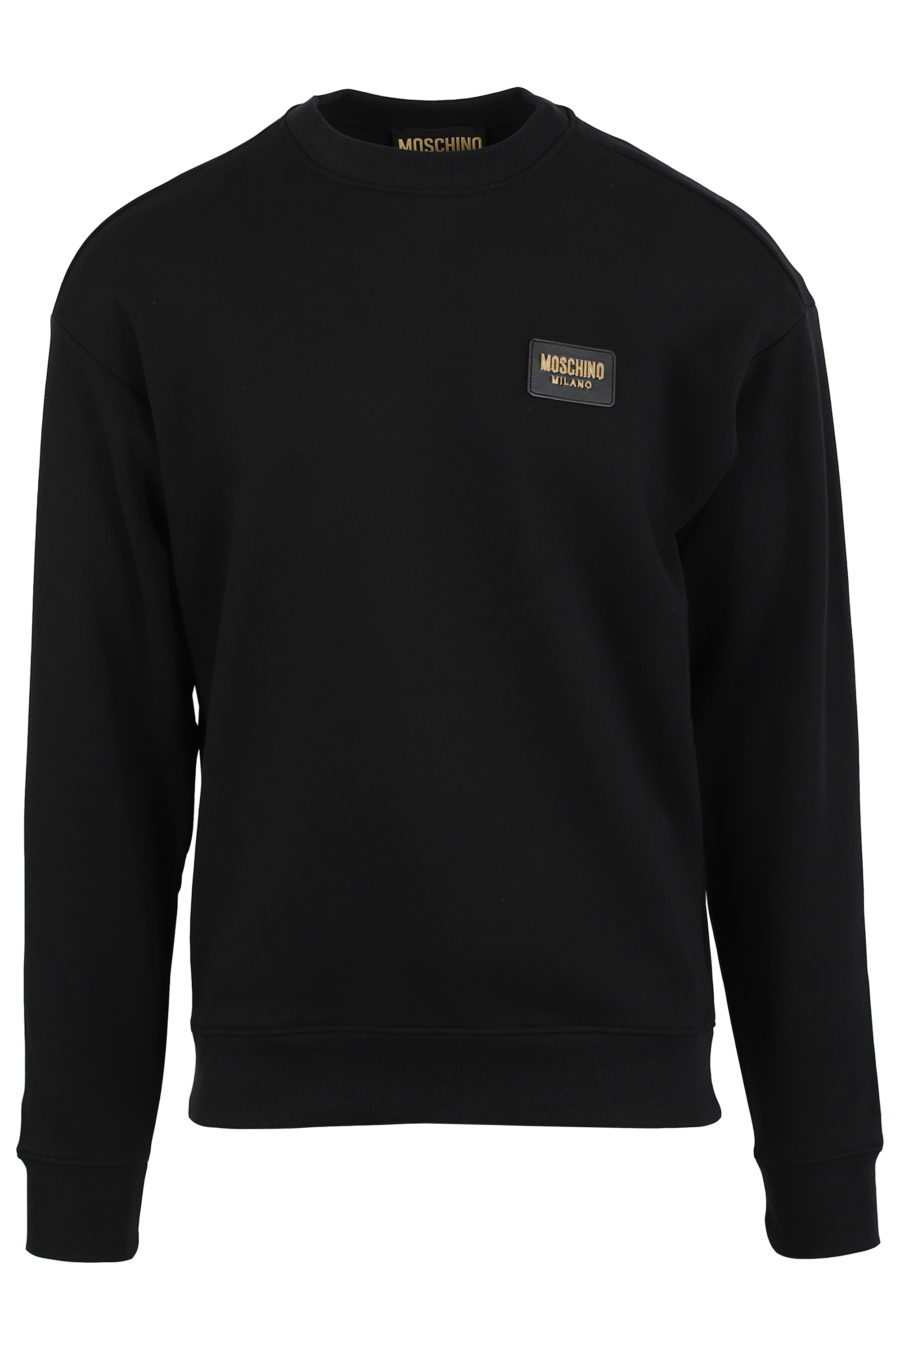 Black sweatshirt with gold logo - IMG 0957